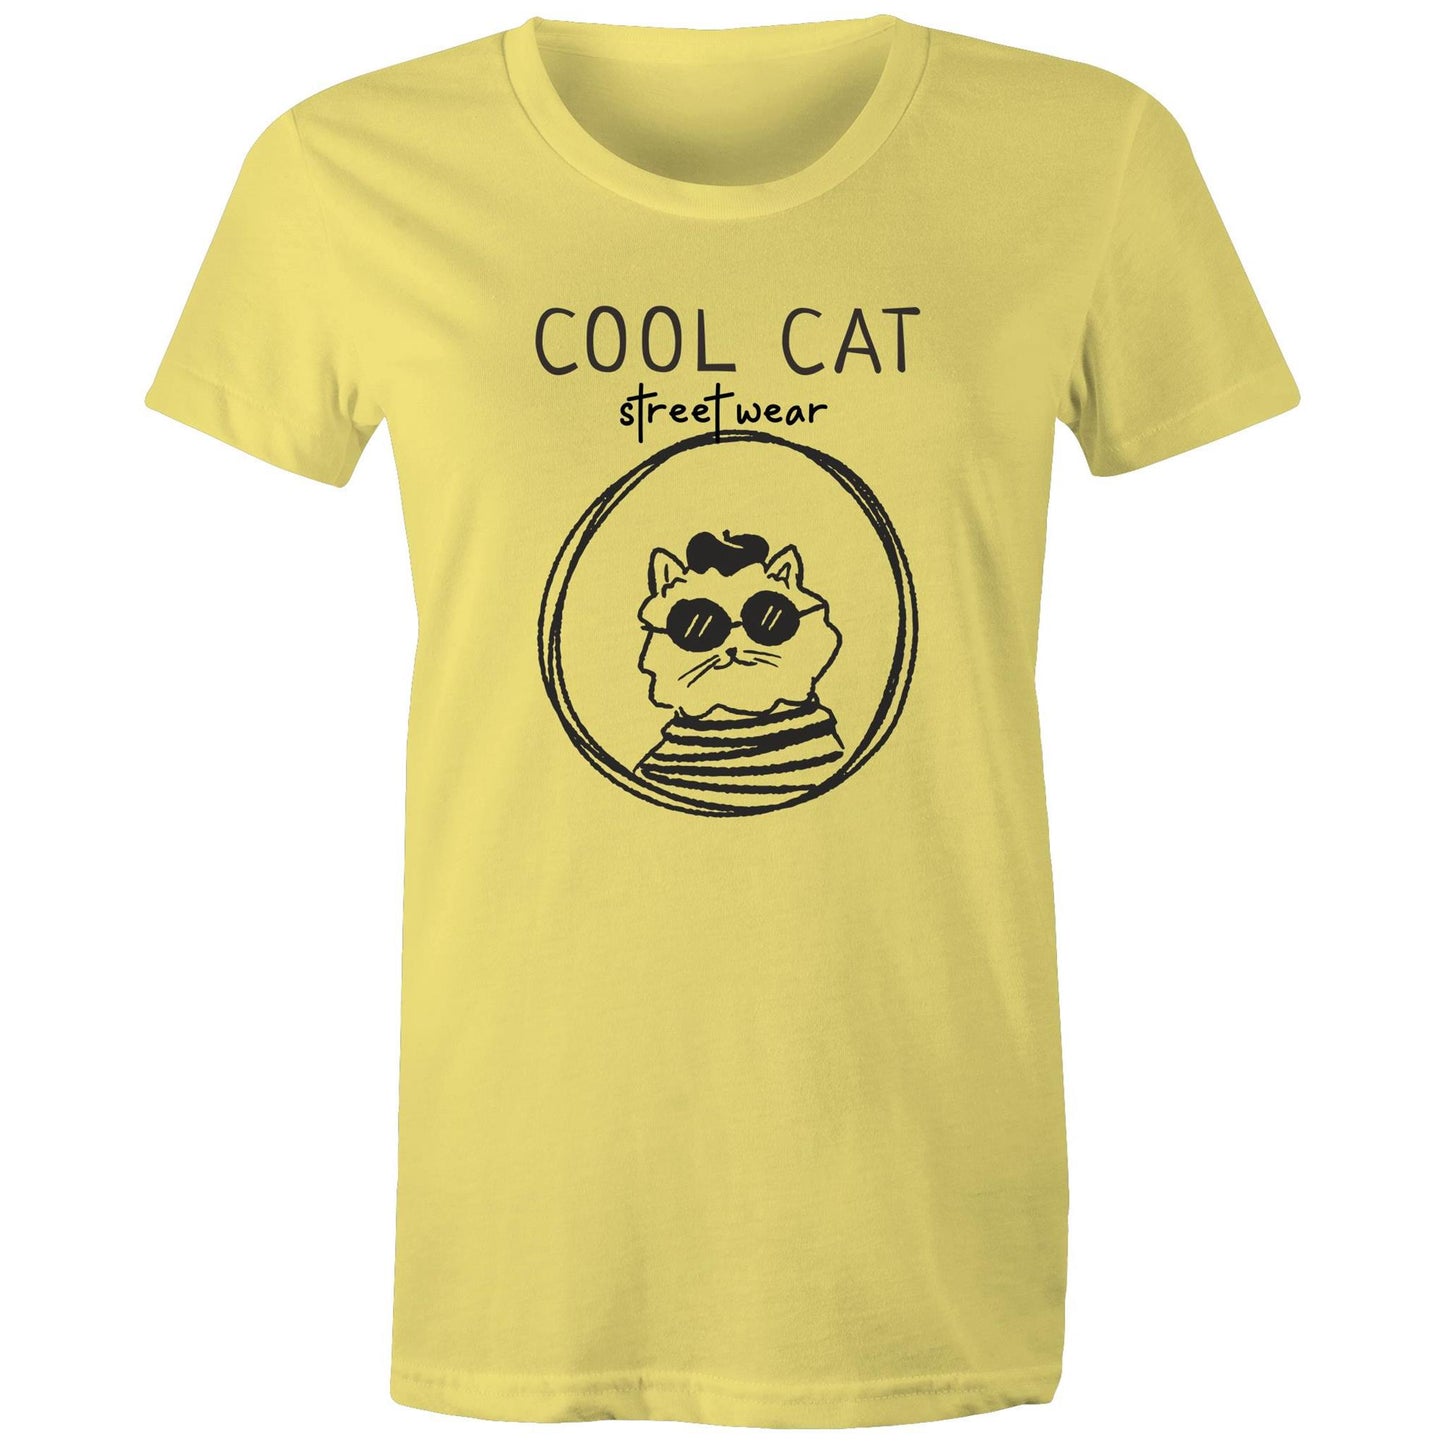 Cool Cat Street Wear Womens TShirt